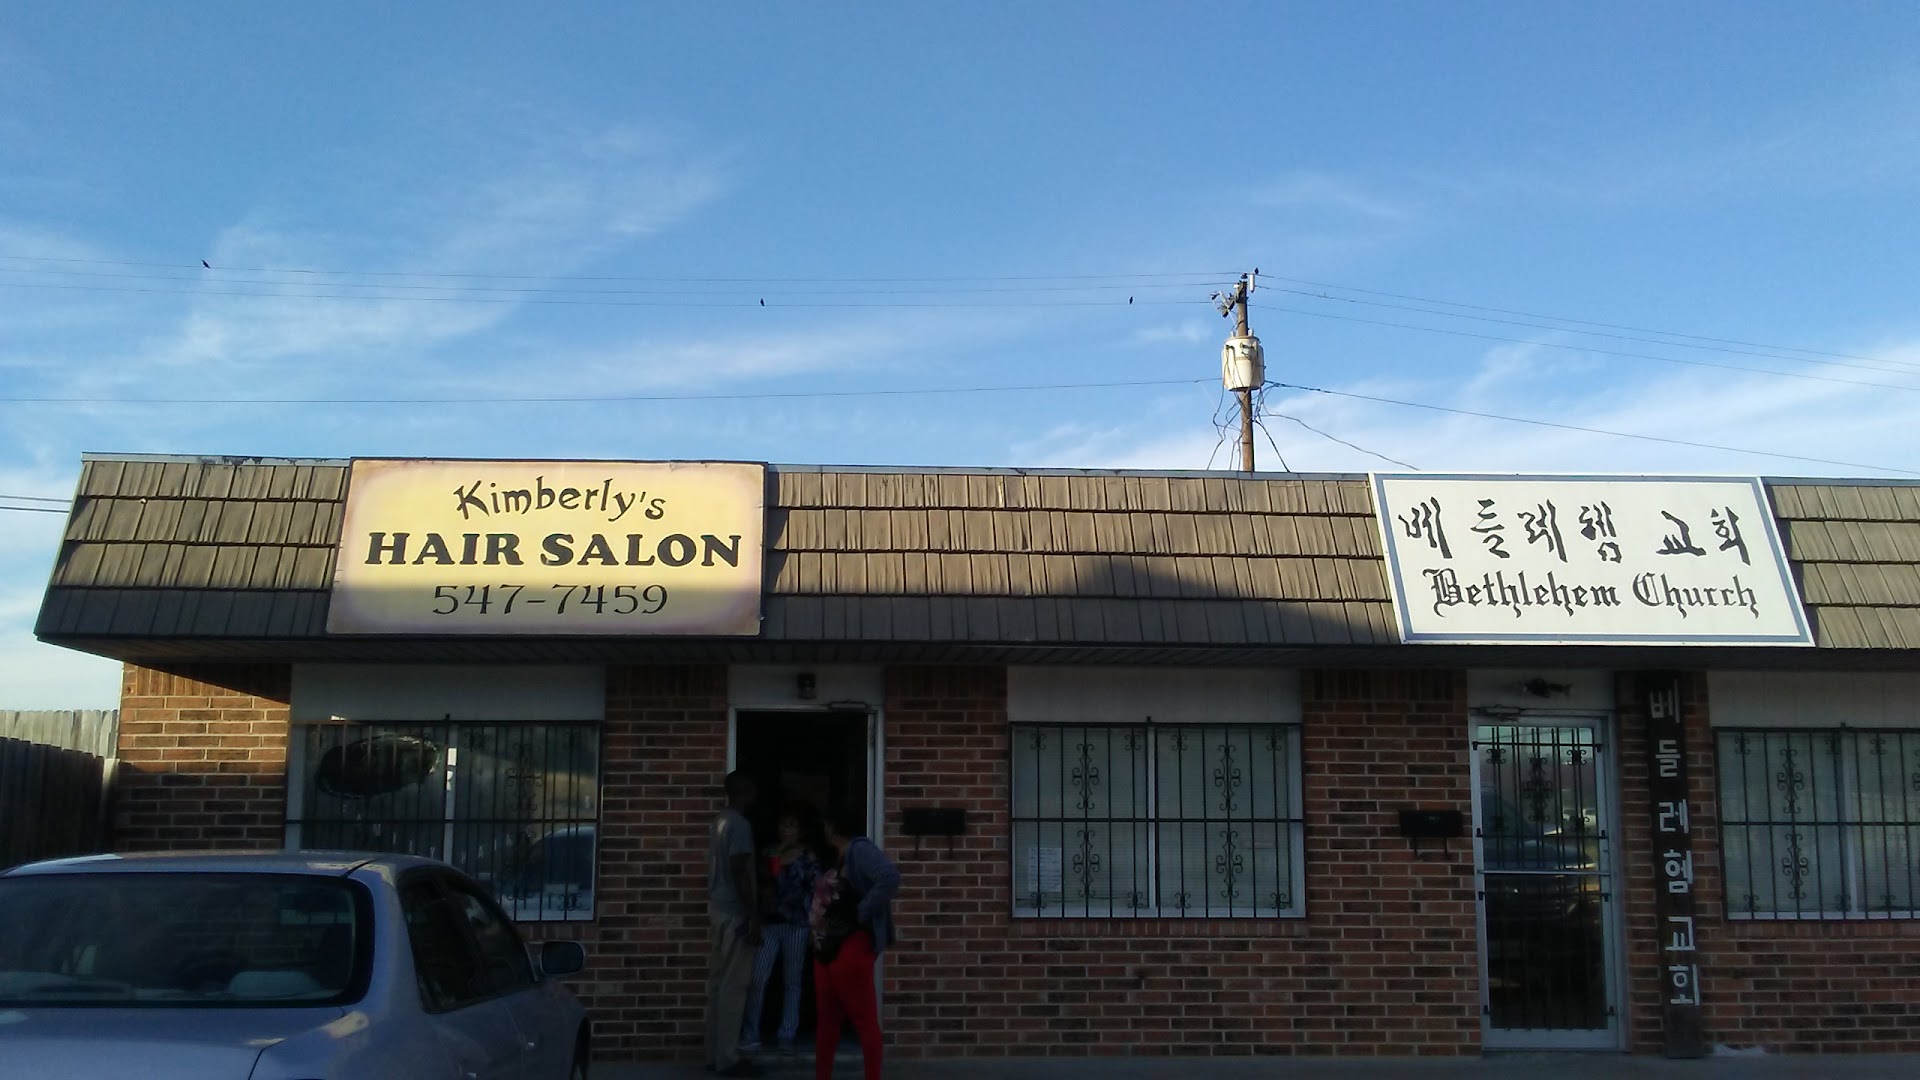 Kimberly's Hair Salon